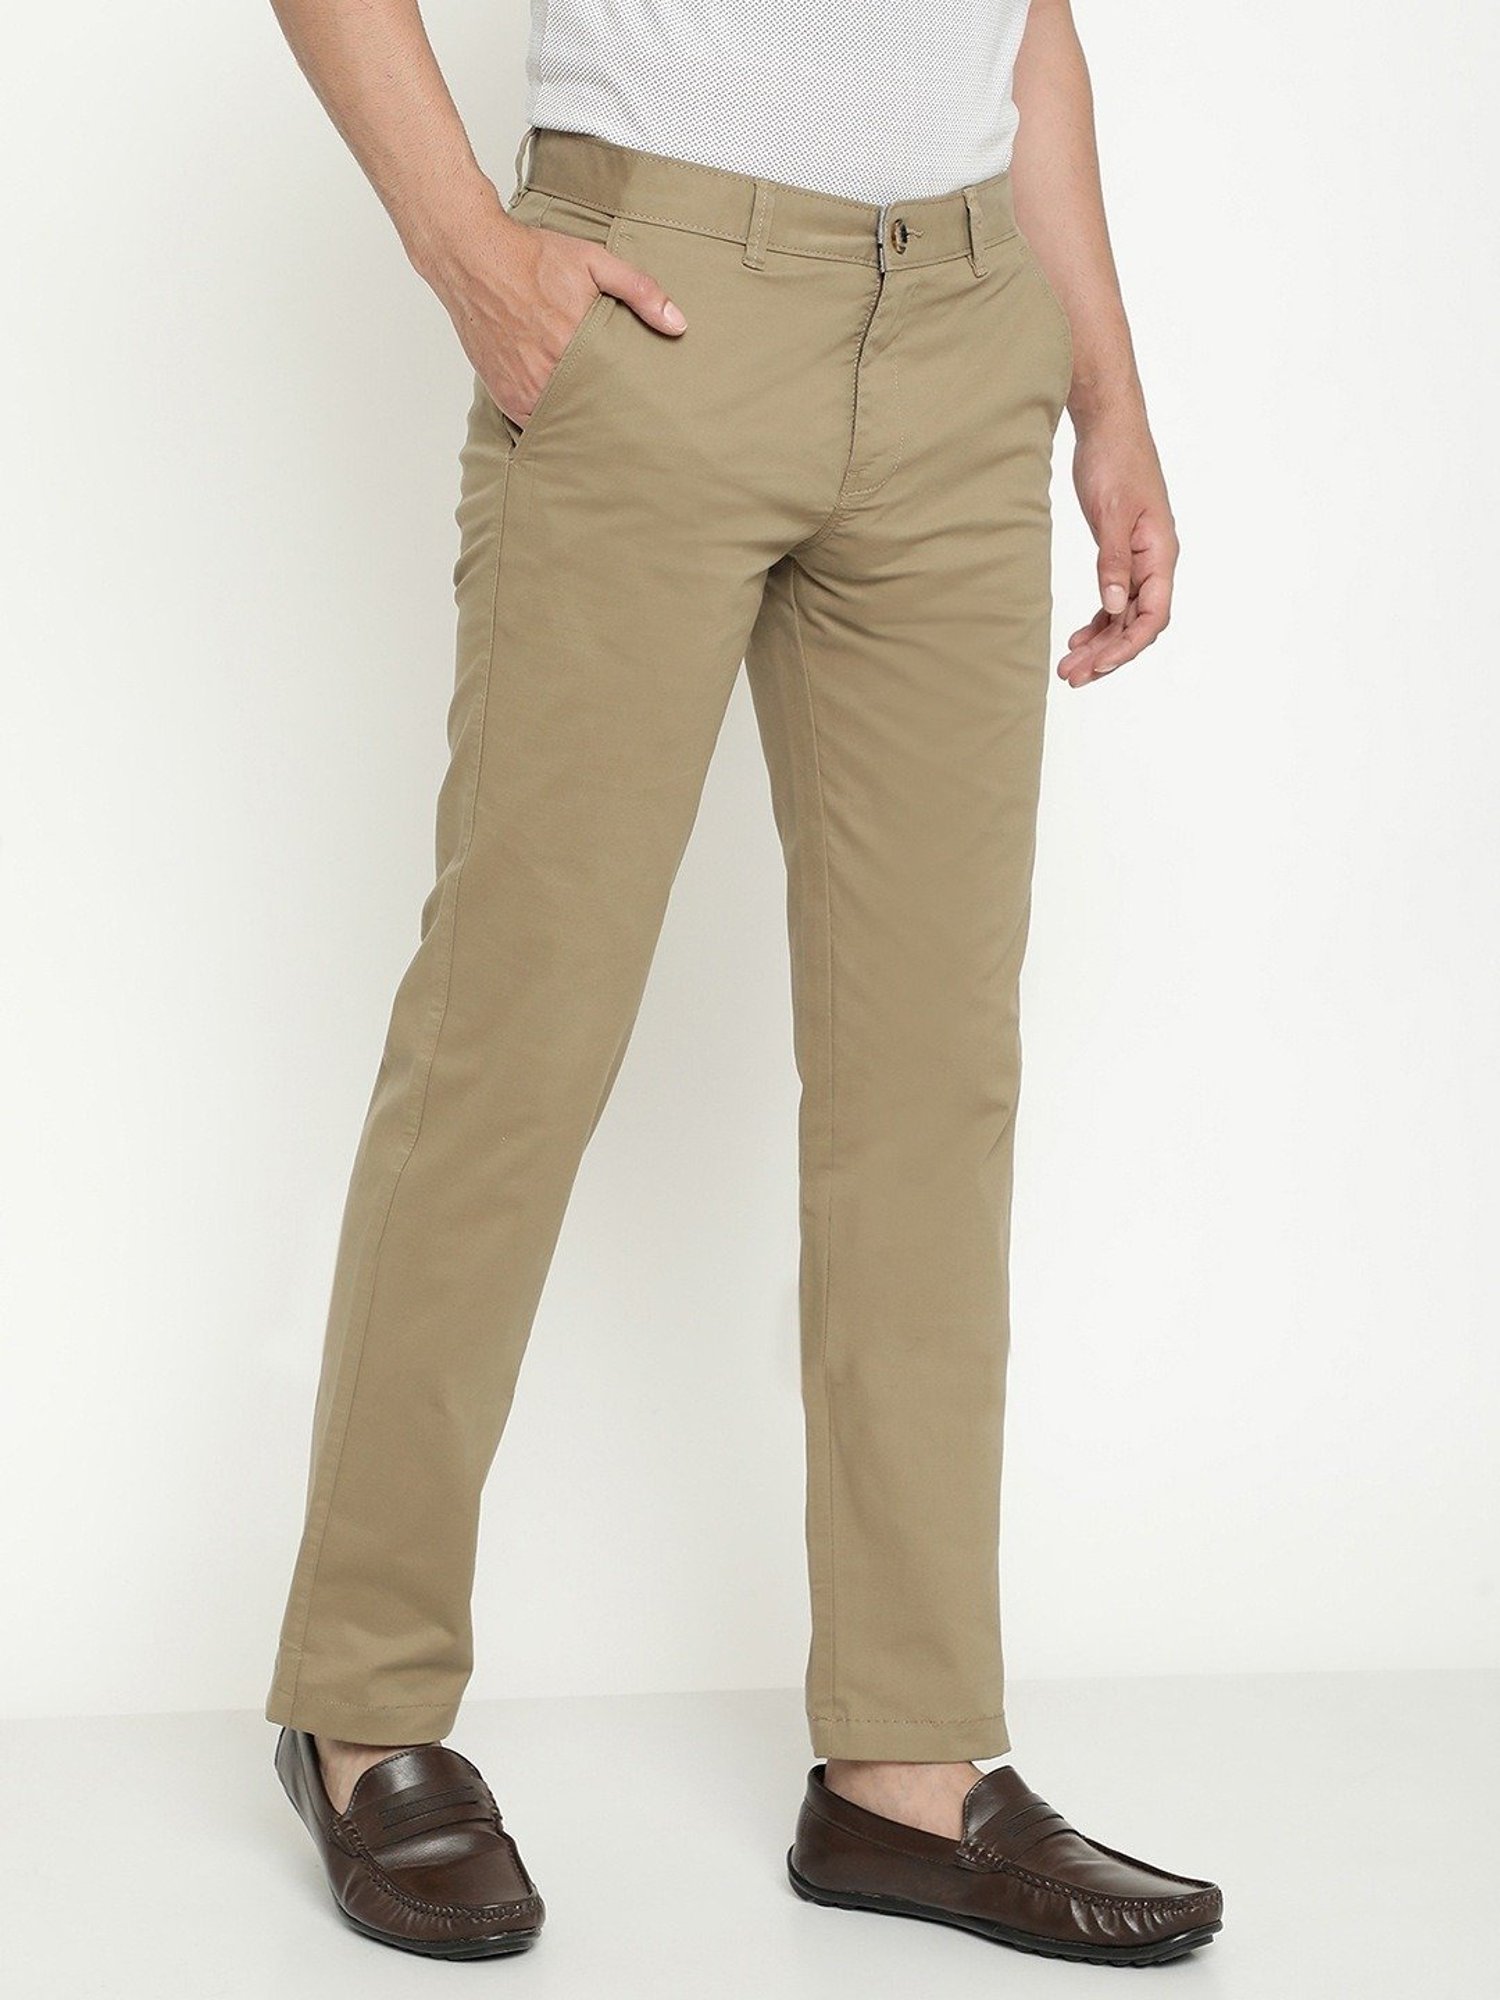 Buy Men Black Solid Regular Fit Trousers Online  173296  Peter England